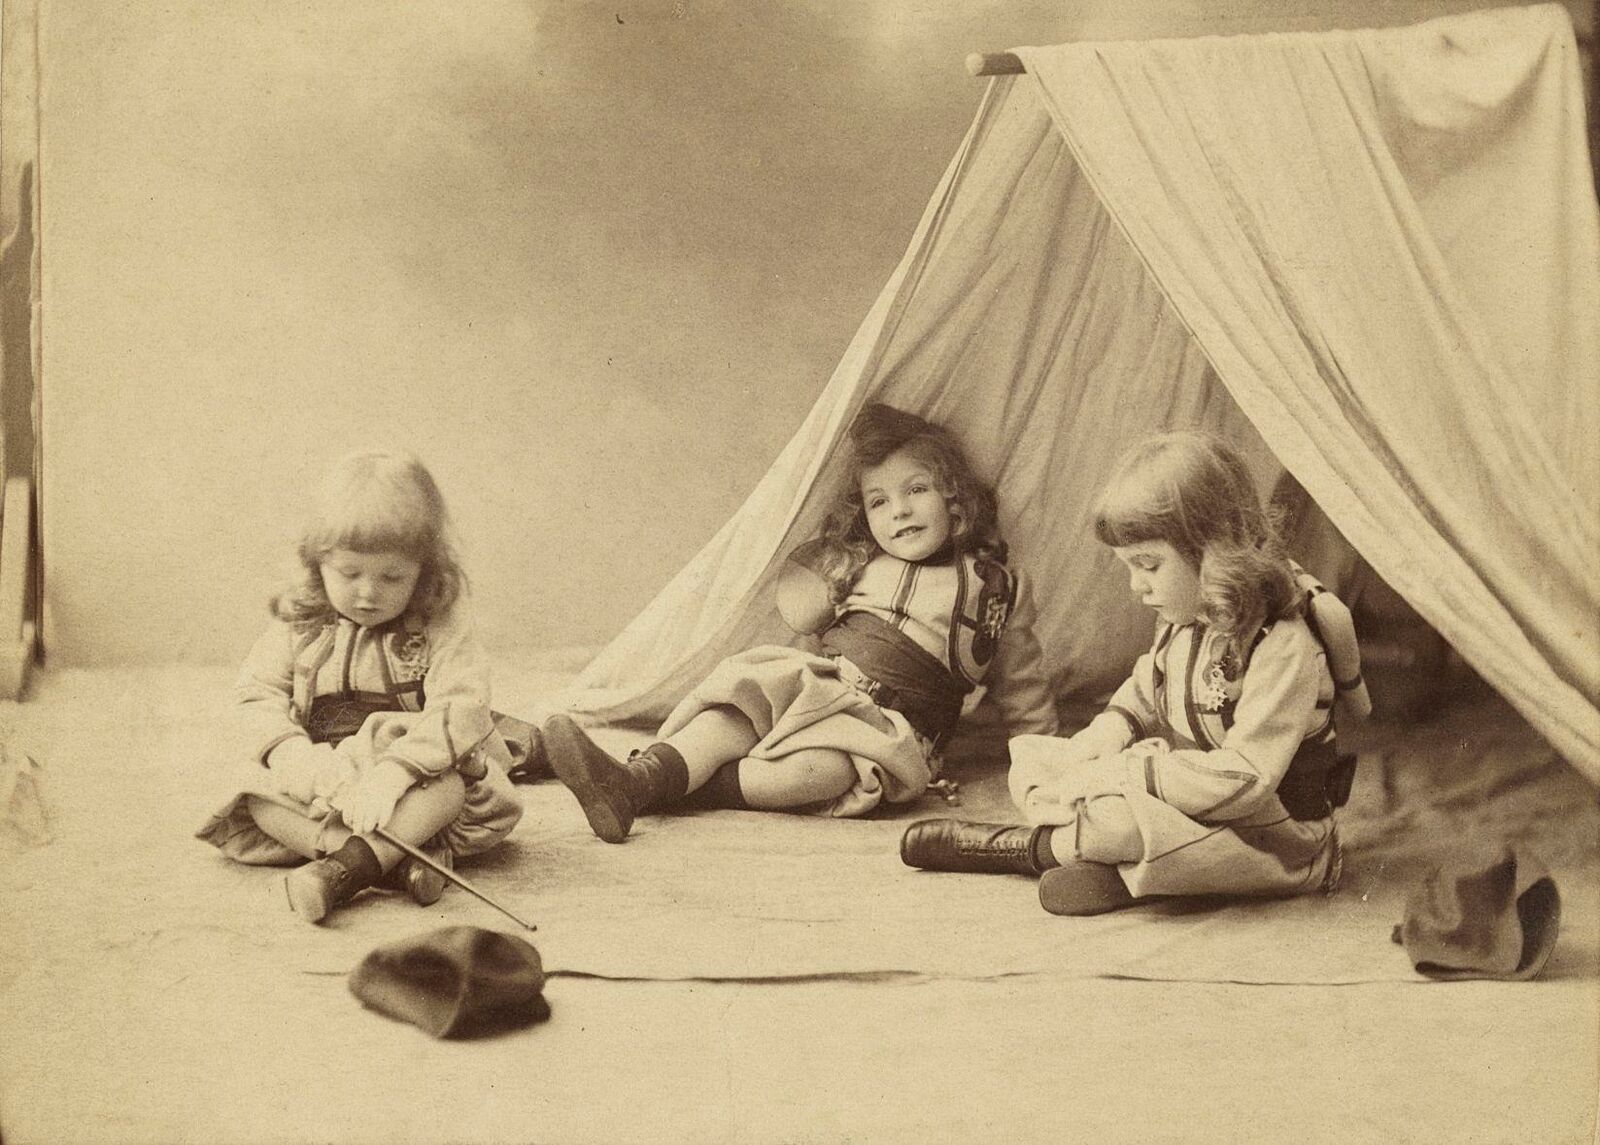 BEAUTIFUL c. 1870's Three Girls Playing Photo by Sebah (Lewis Carroll-like)